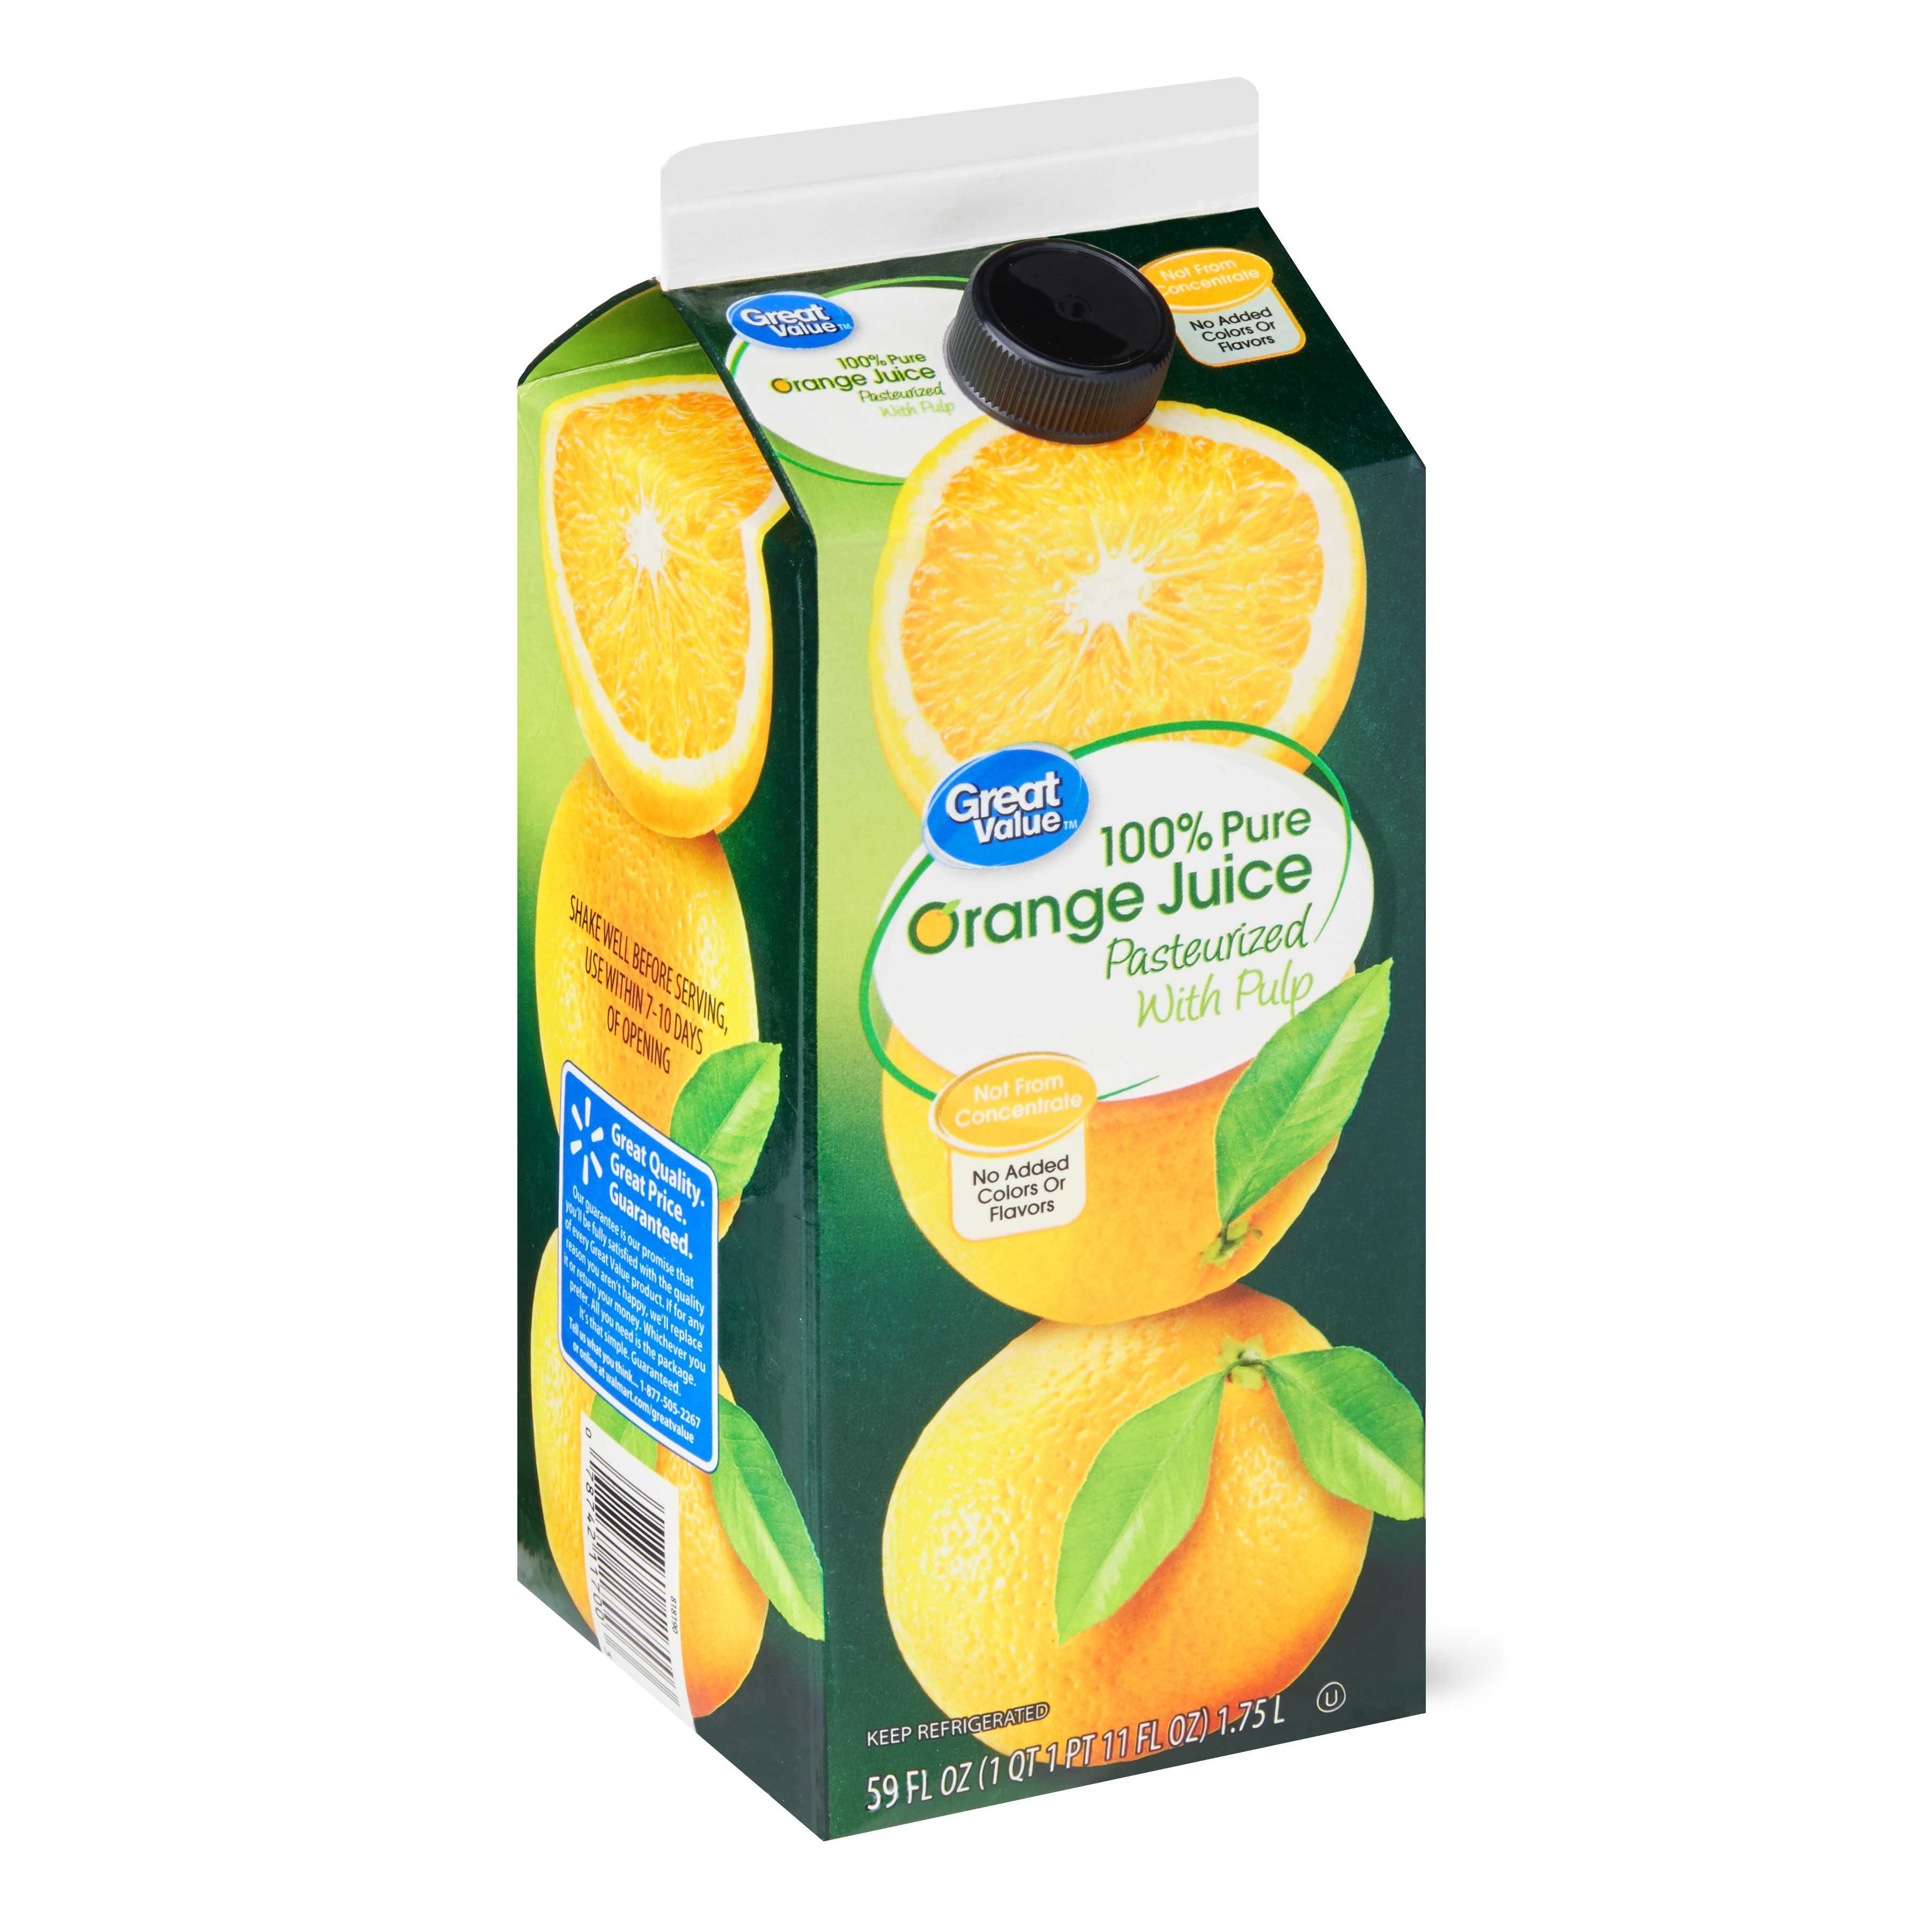 Great Value 100% Pure Orange Juice with Pulp, 59 fl oz